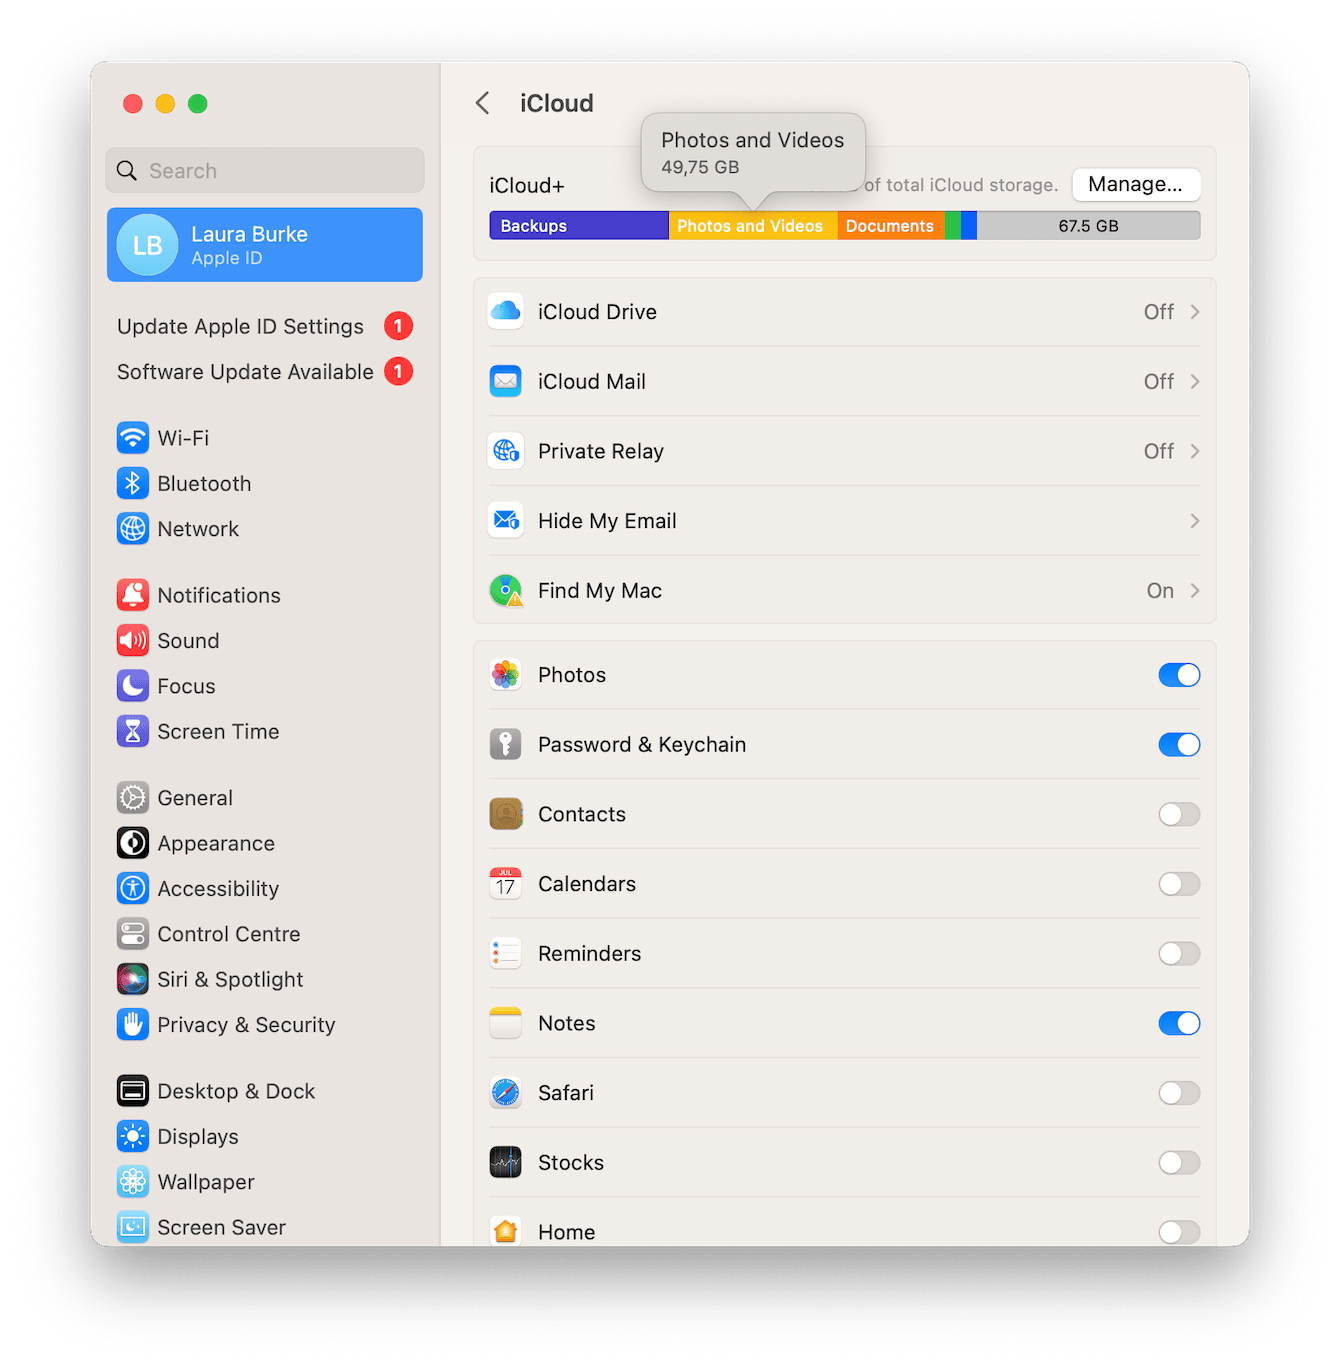 iCloud storage on a Mac